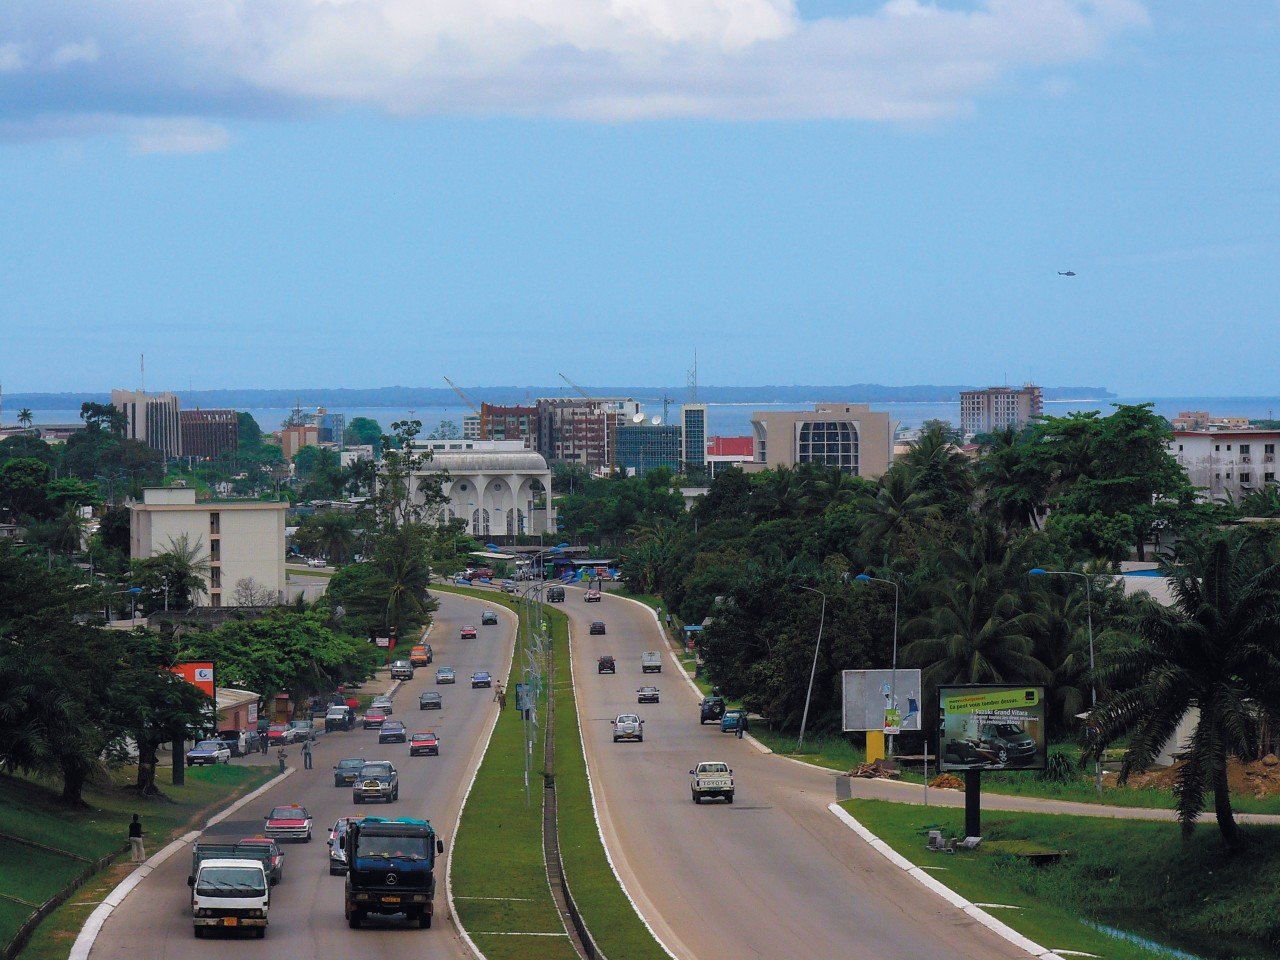 Tag20 : Letzte Stunden in Libreville